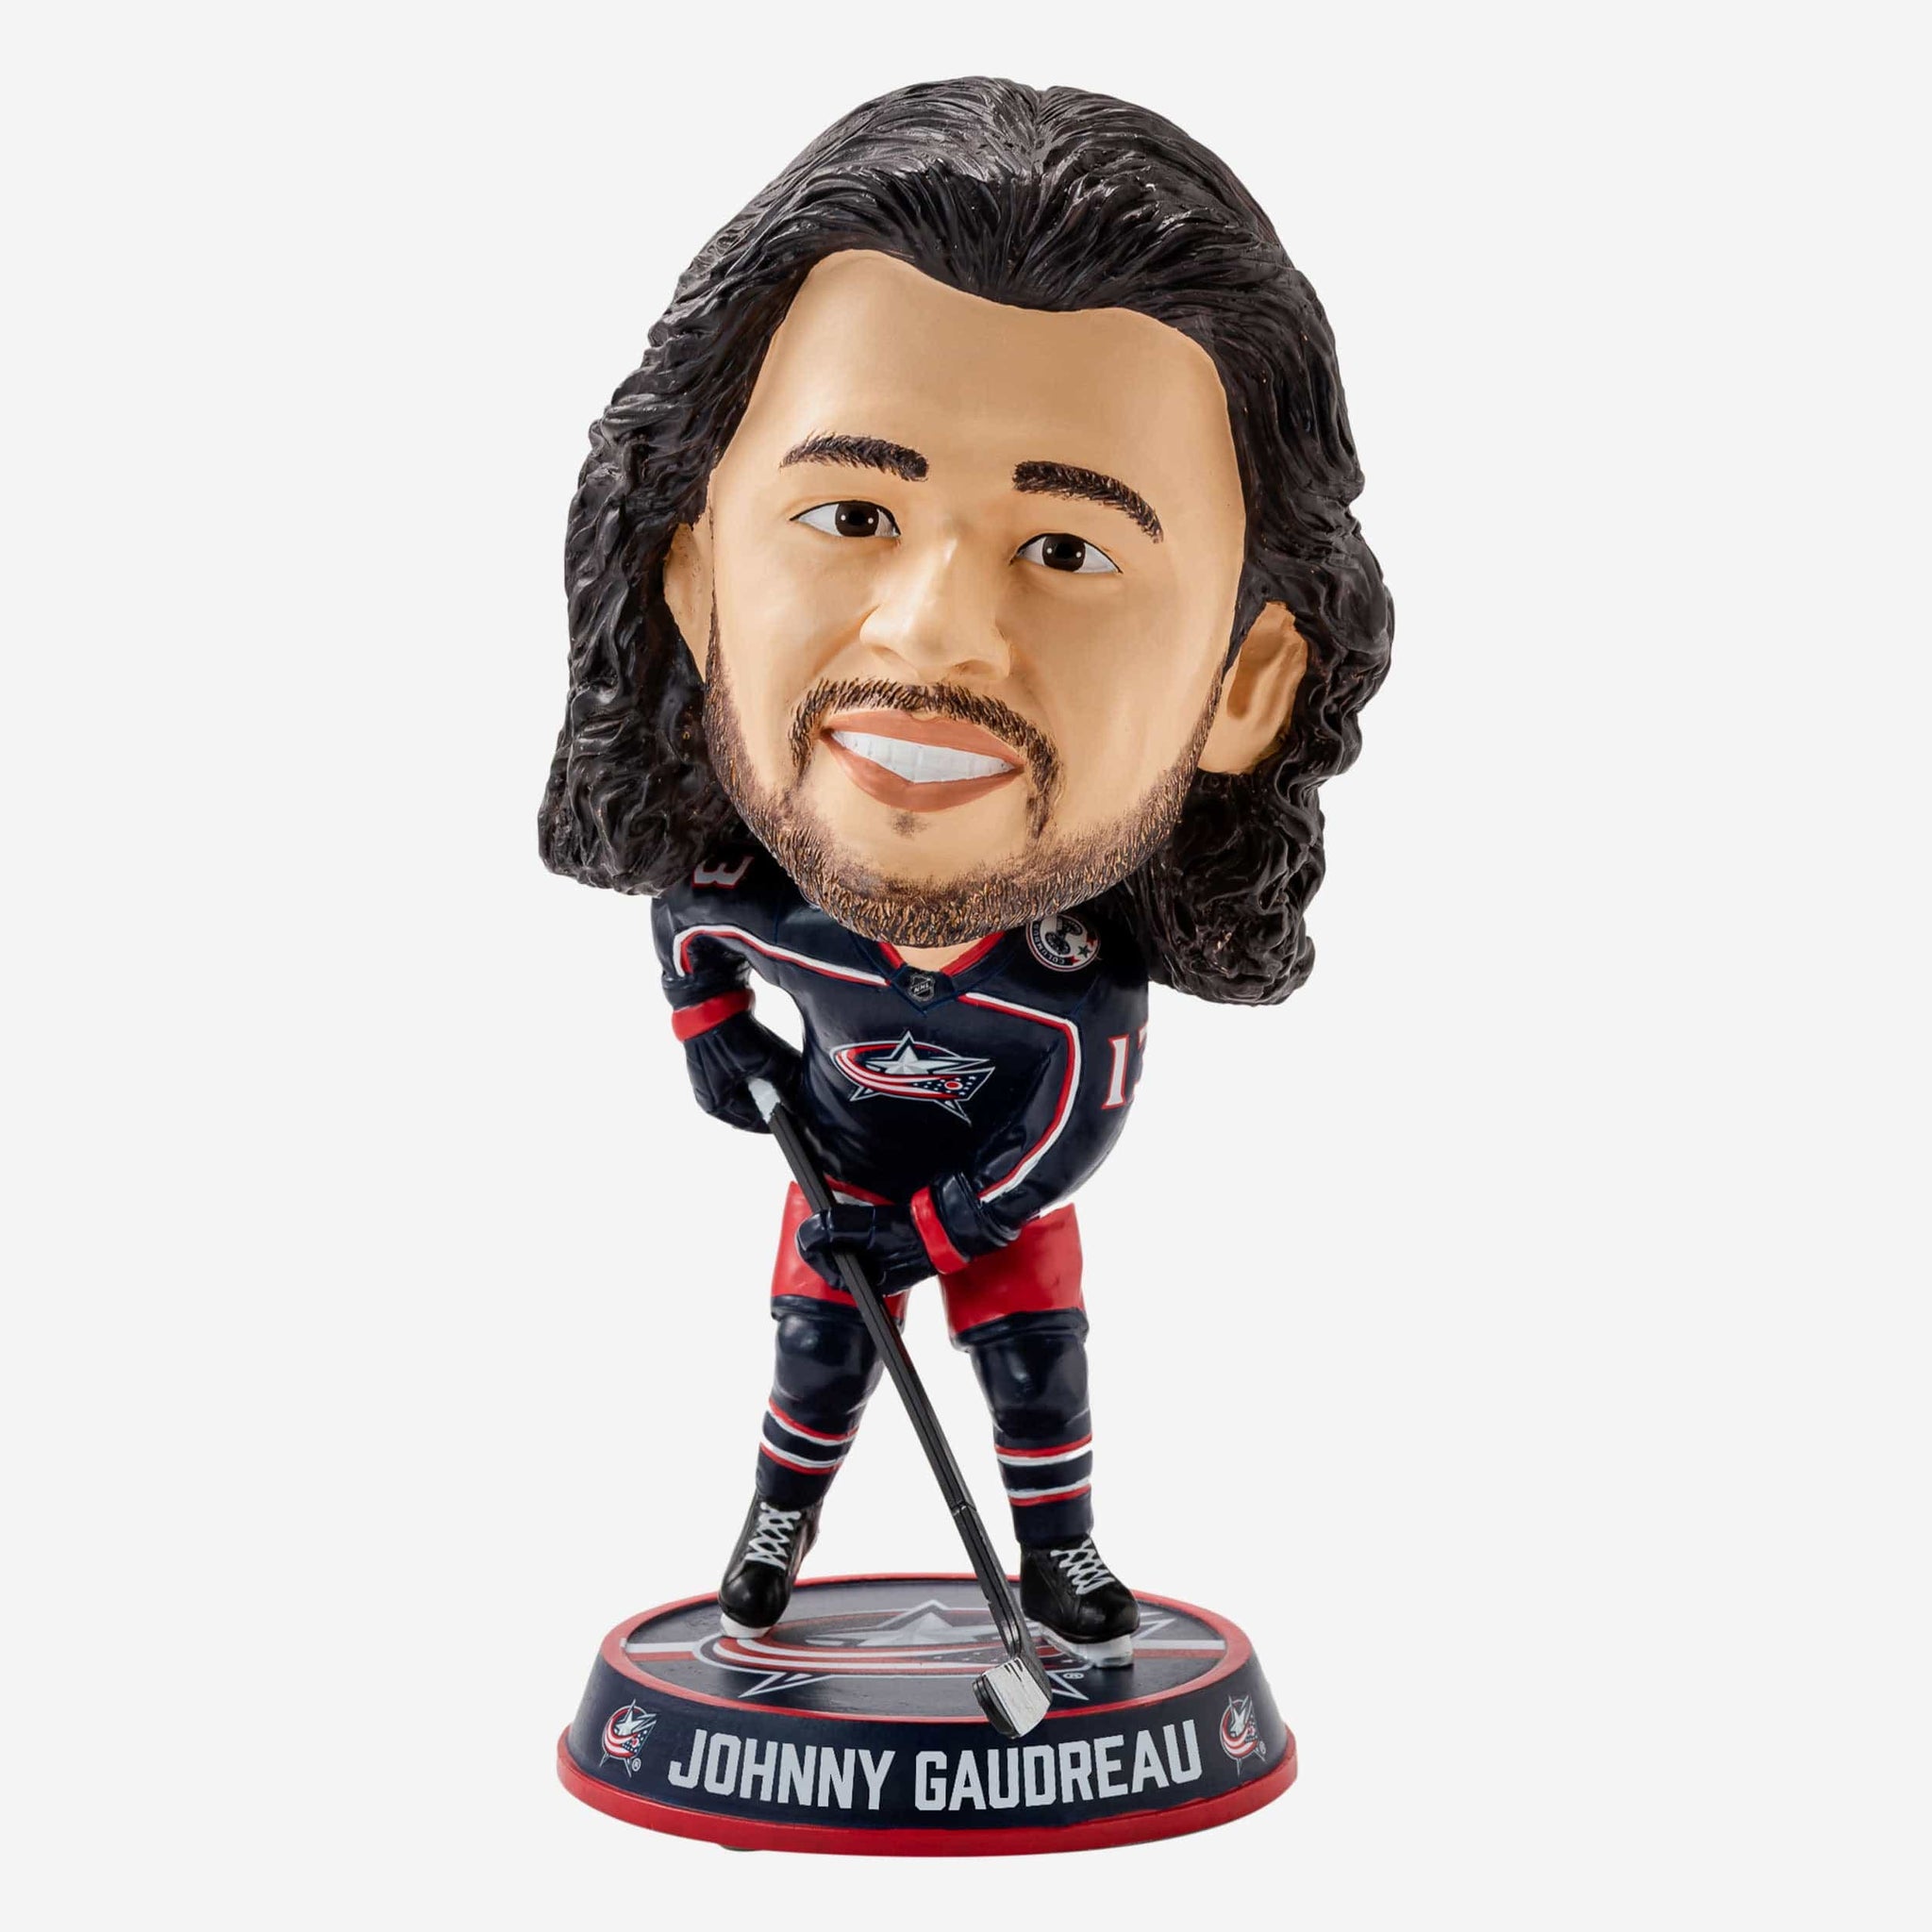 Johnny Gaudreau Columbus Blue Jackets Bighead Bobblehead Officially Licensed by NHL